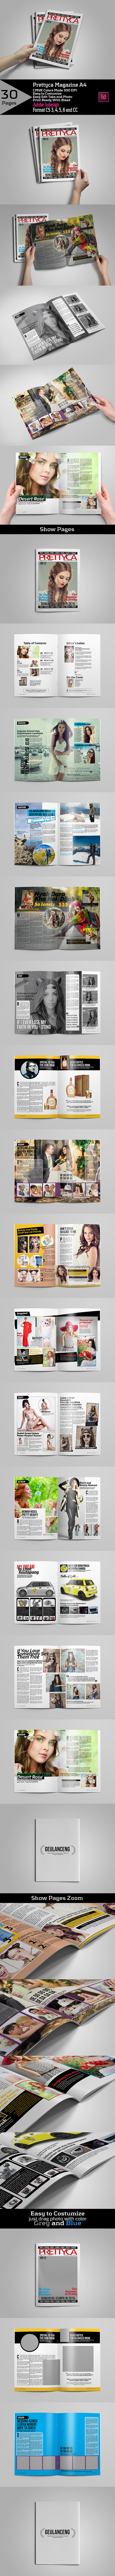 a4 magazines Multipurpose universal Retro product Cosmetic